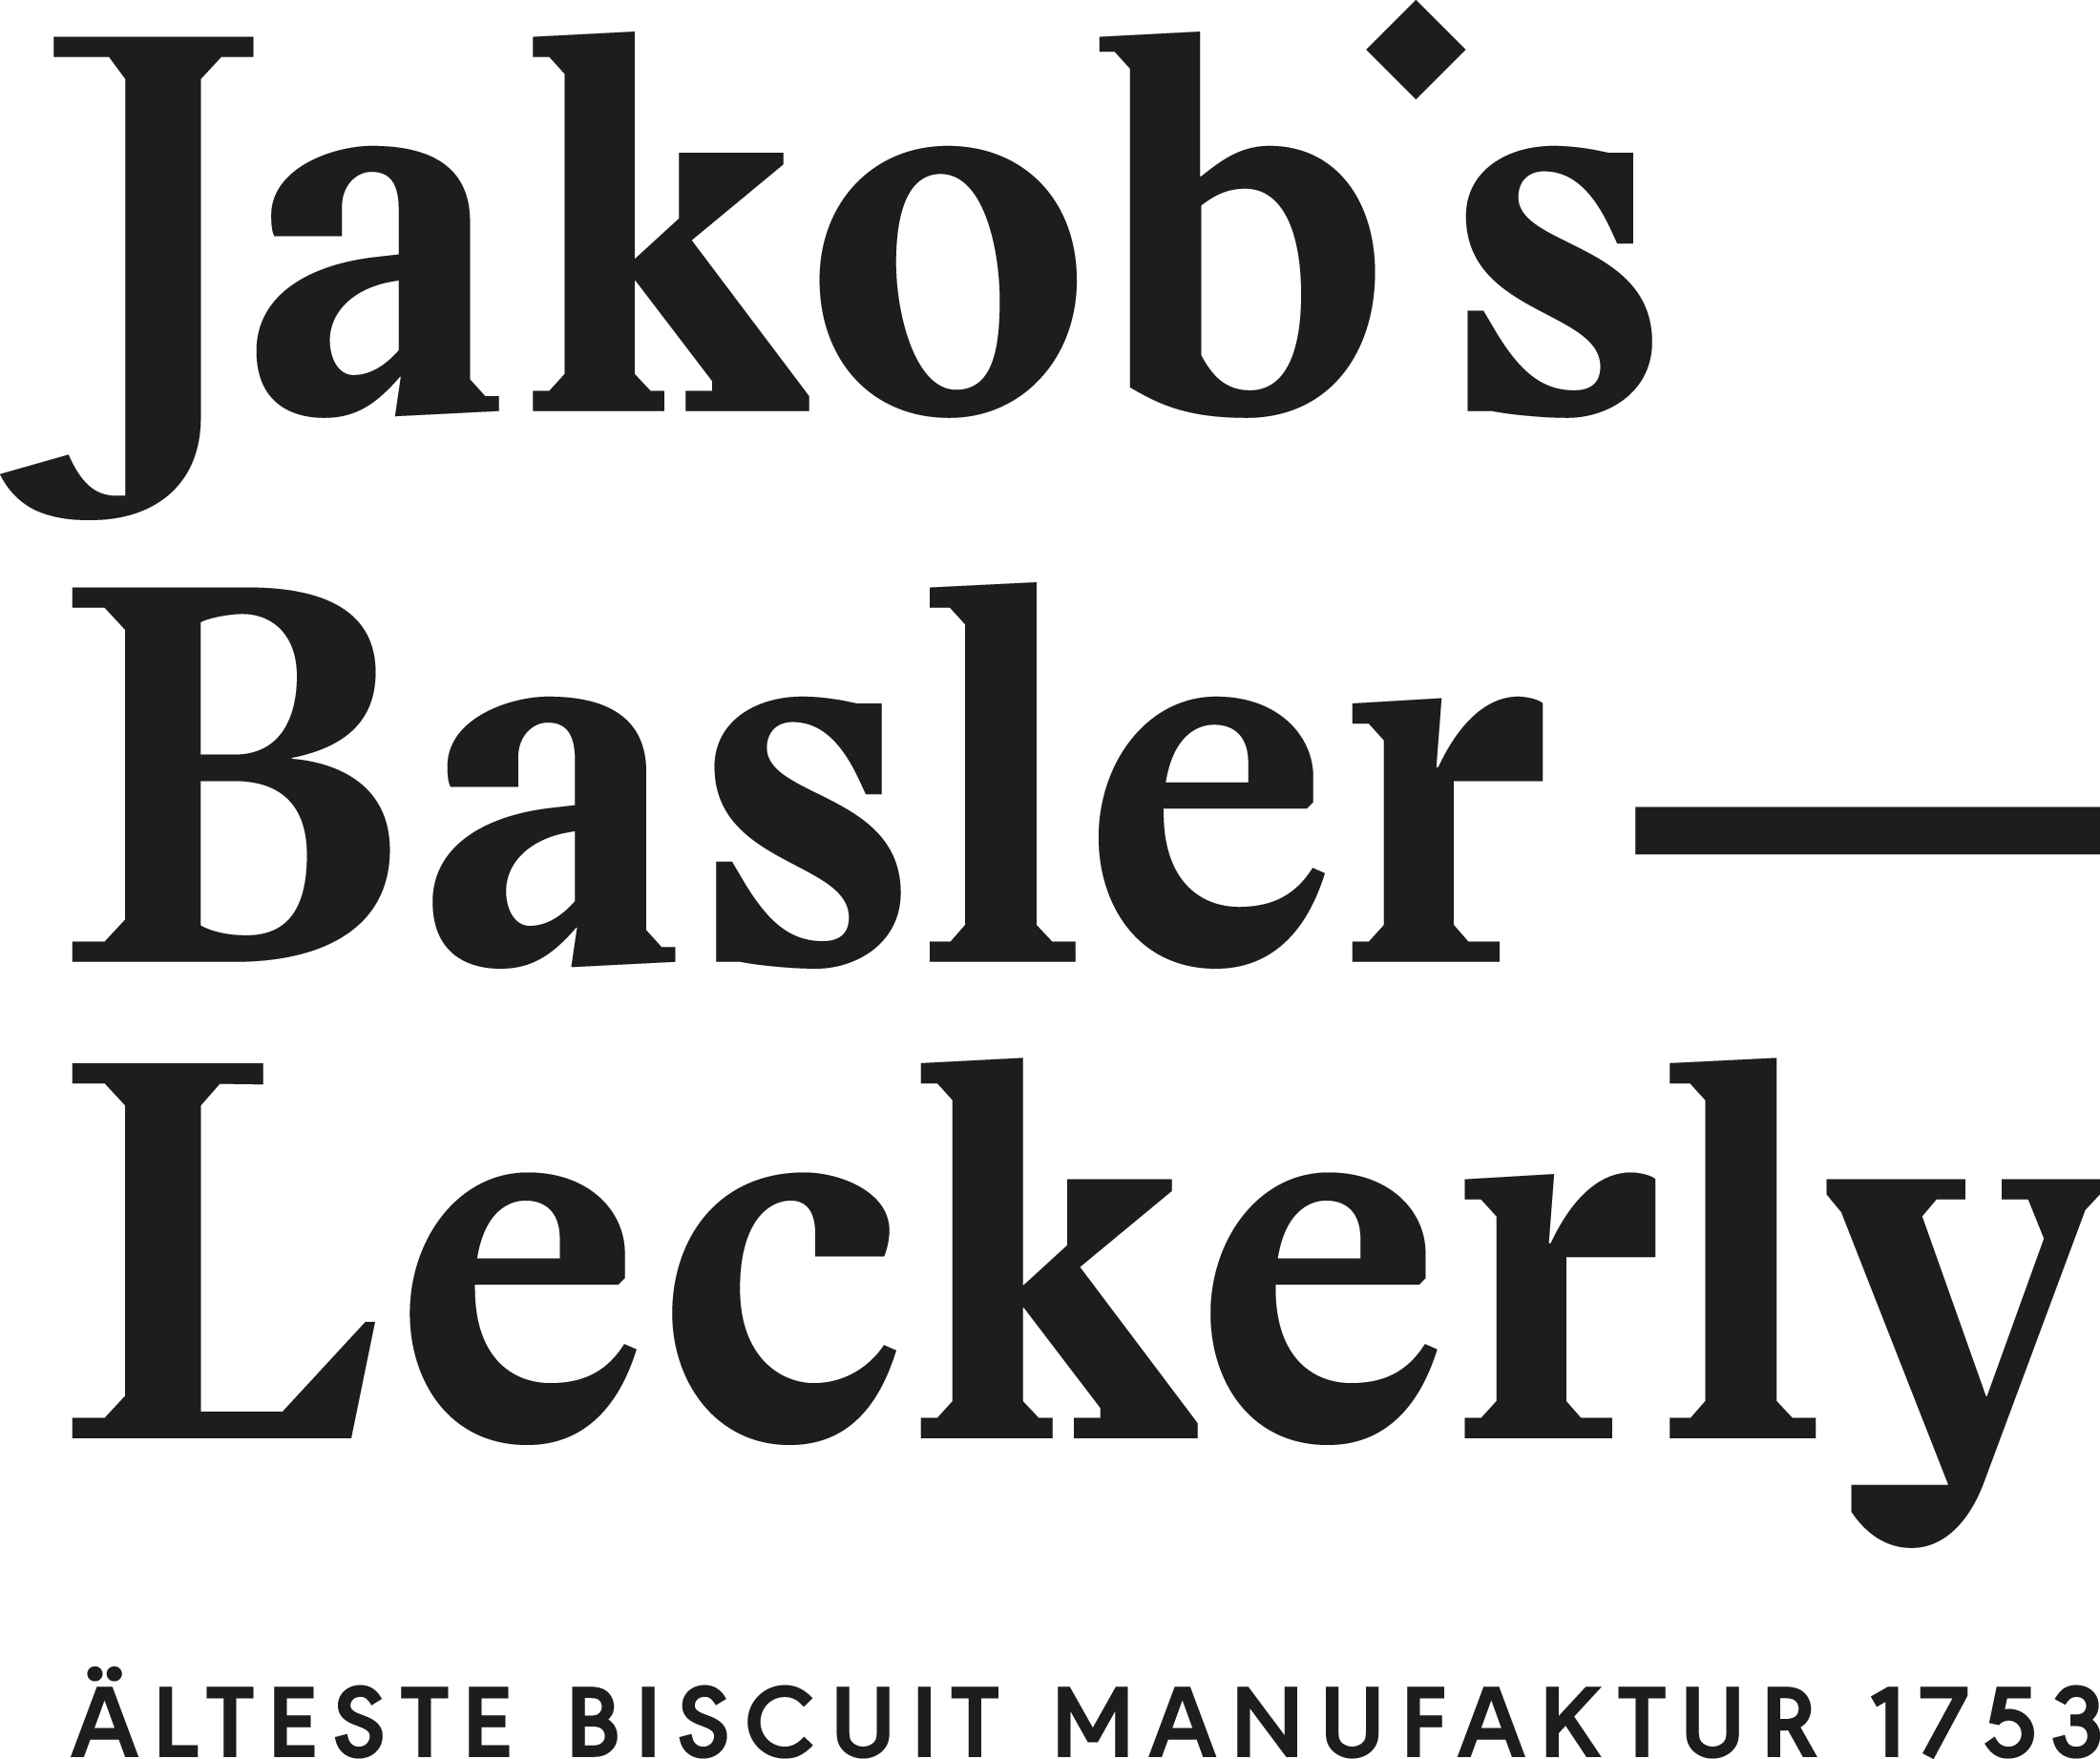 Jakob's Basler Leckerly Logo